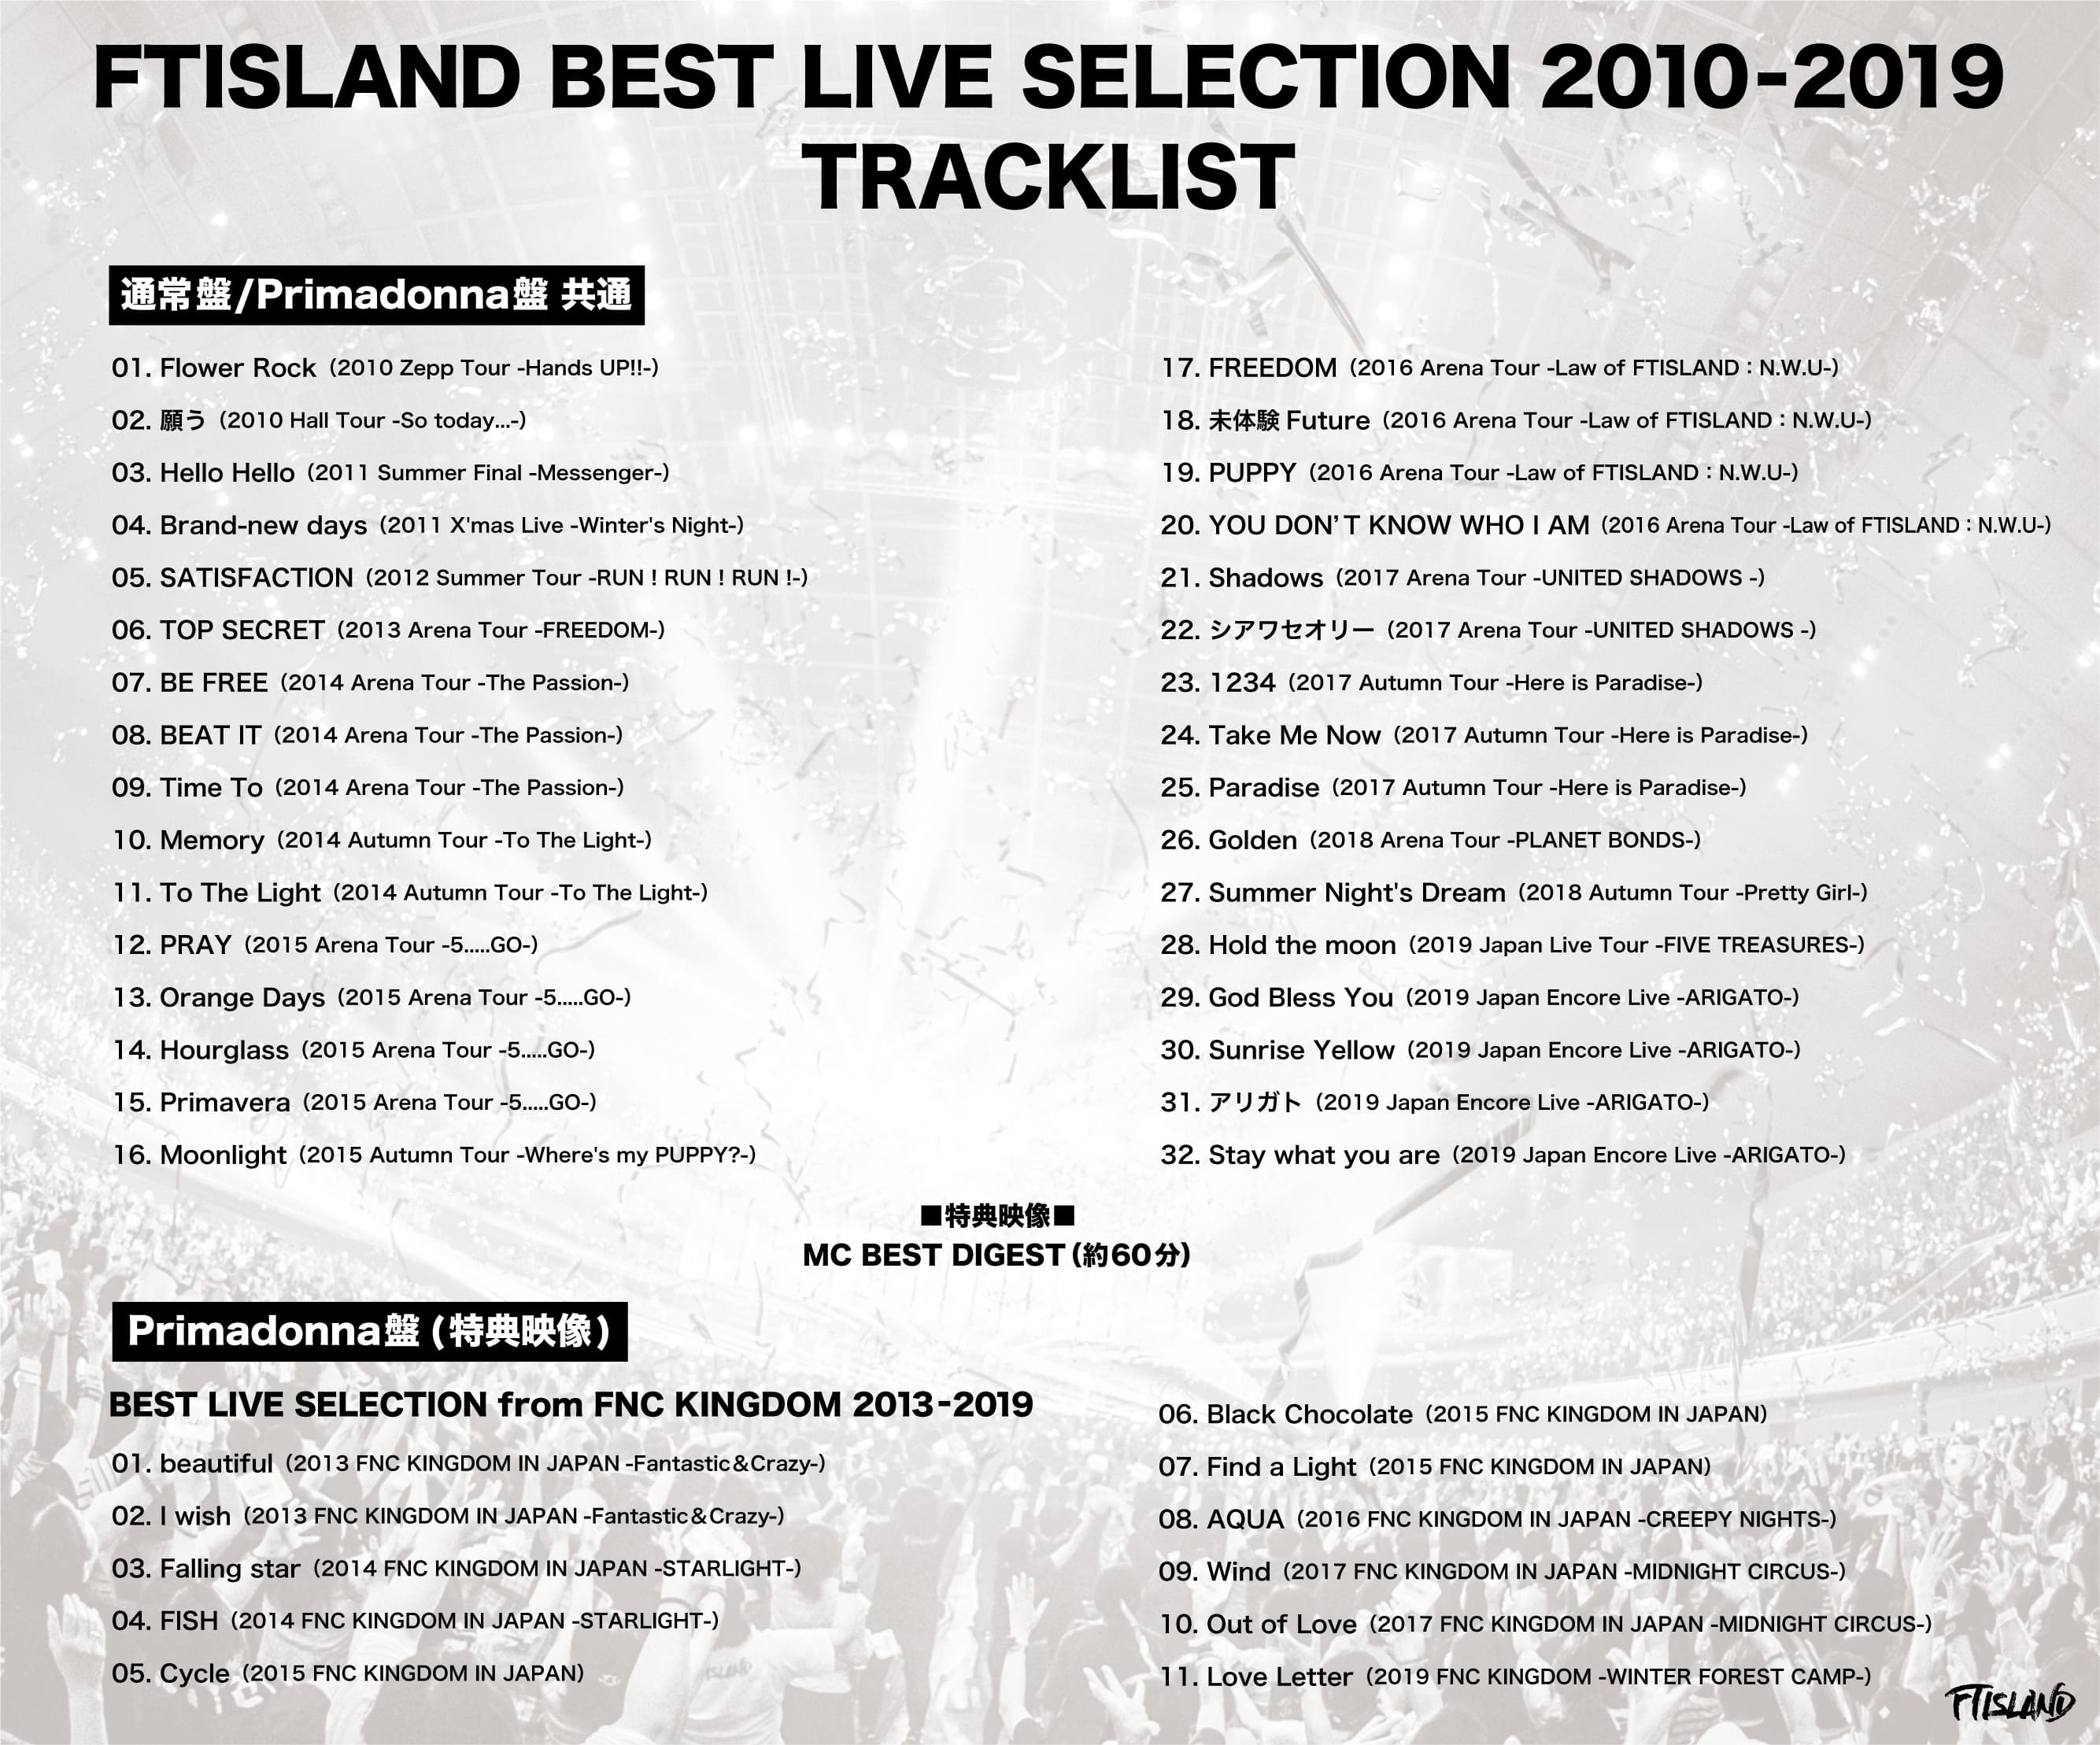 FTISLAND、全19ツアー131公演からセットリストを厳選し再構成した